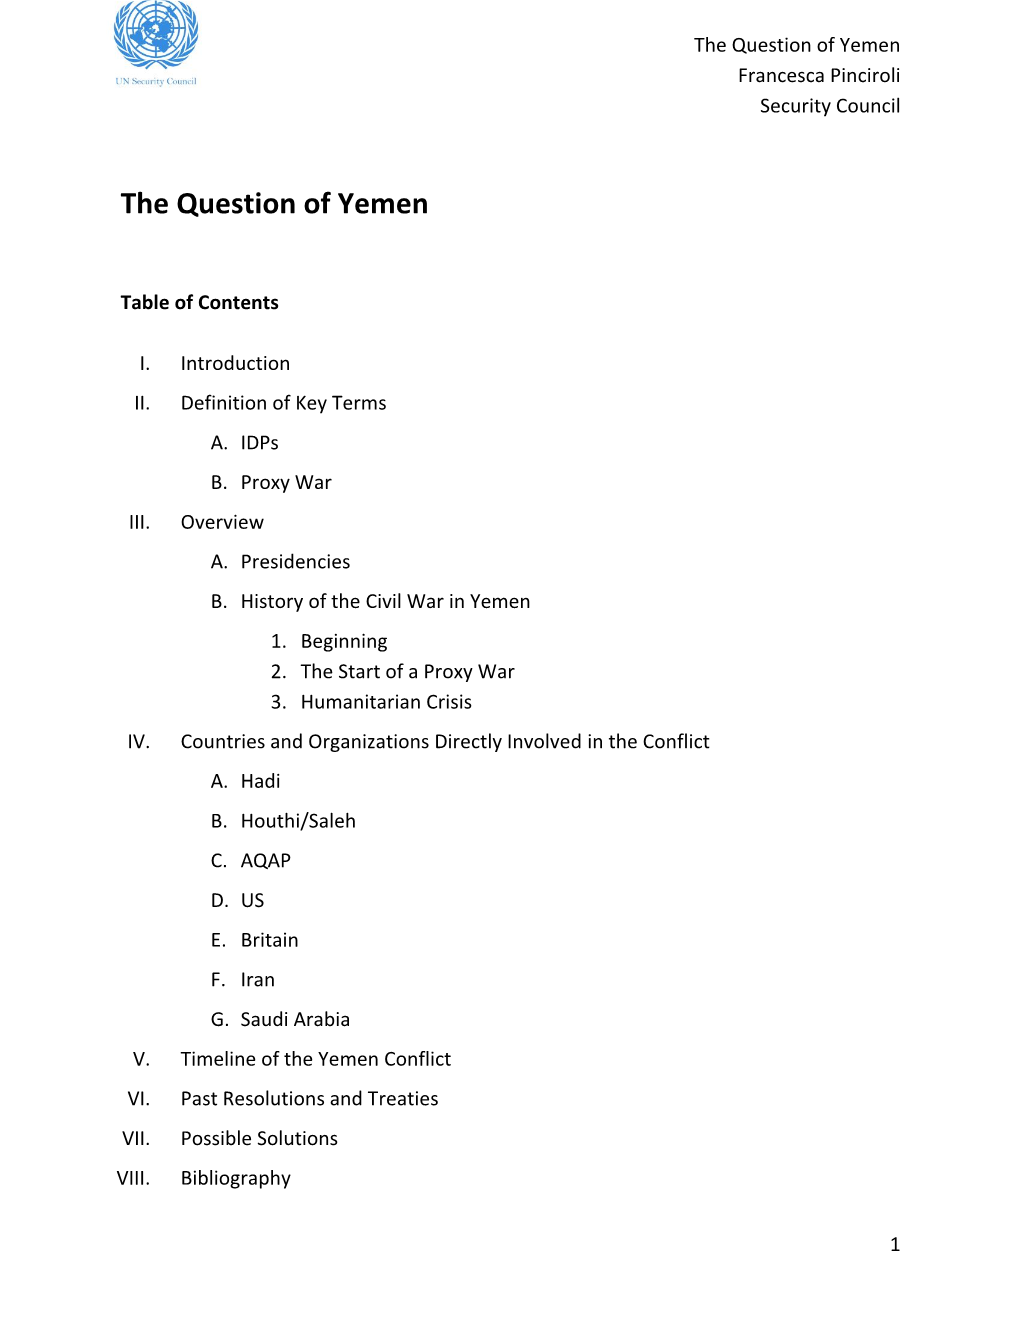 The Question of Yemen Francesca Pinciroli Security Council